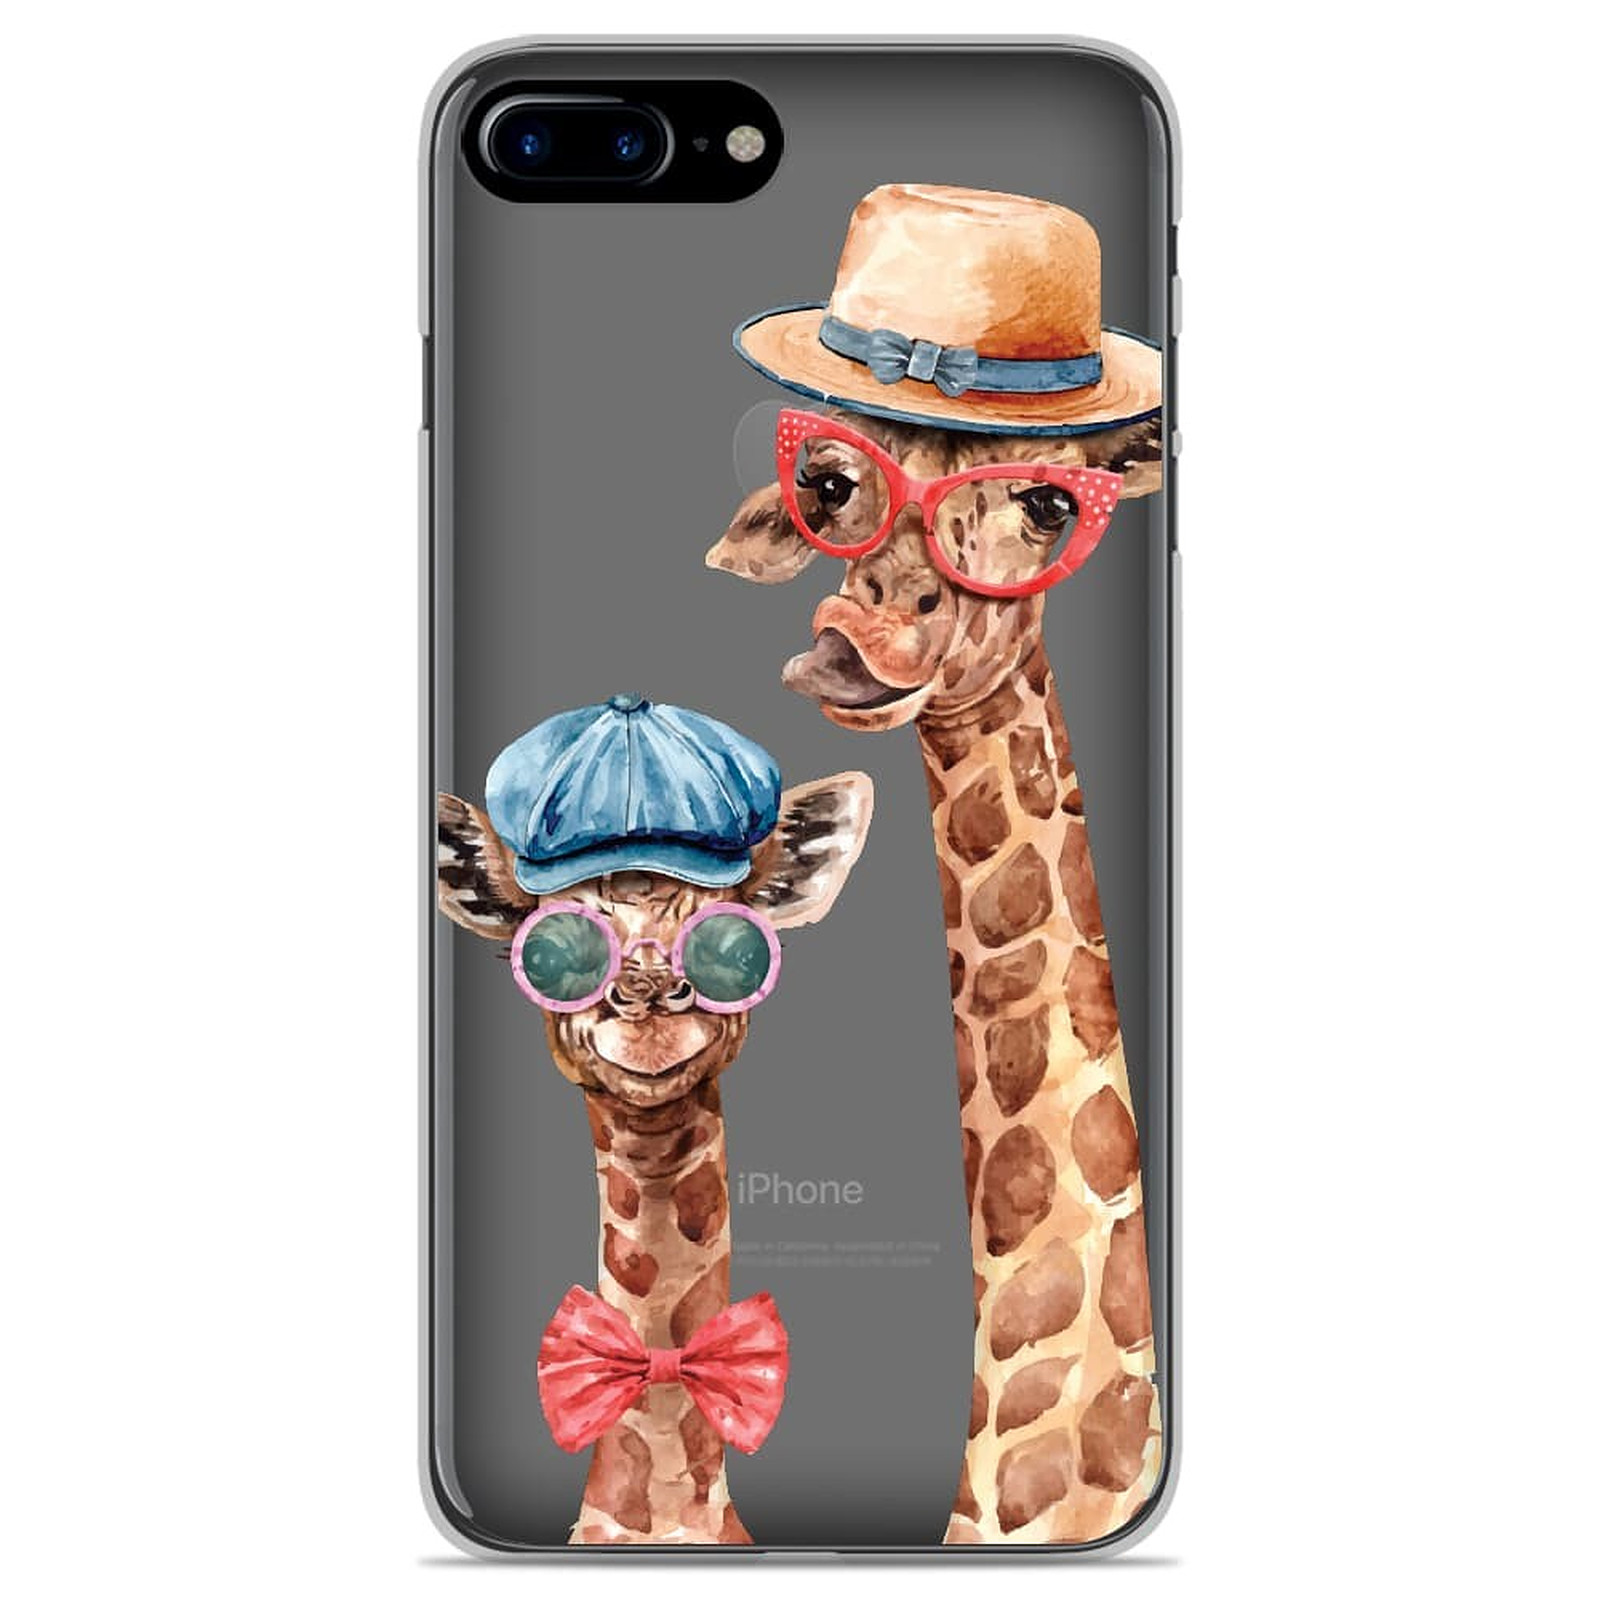 1001 Coques Coque silicone gel Apple iPhone 8 Plus motif Funny Girafe - Coque telephone 1001Coques